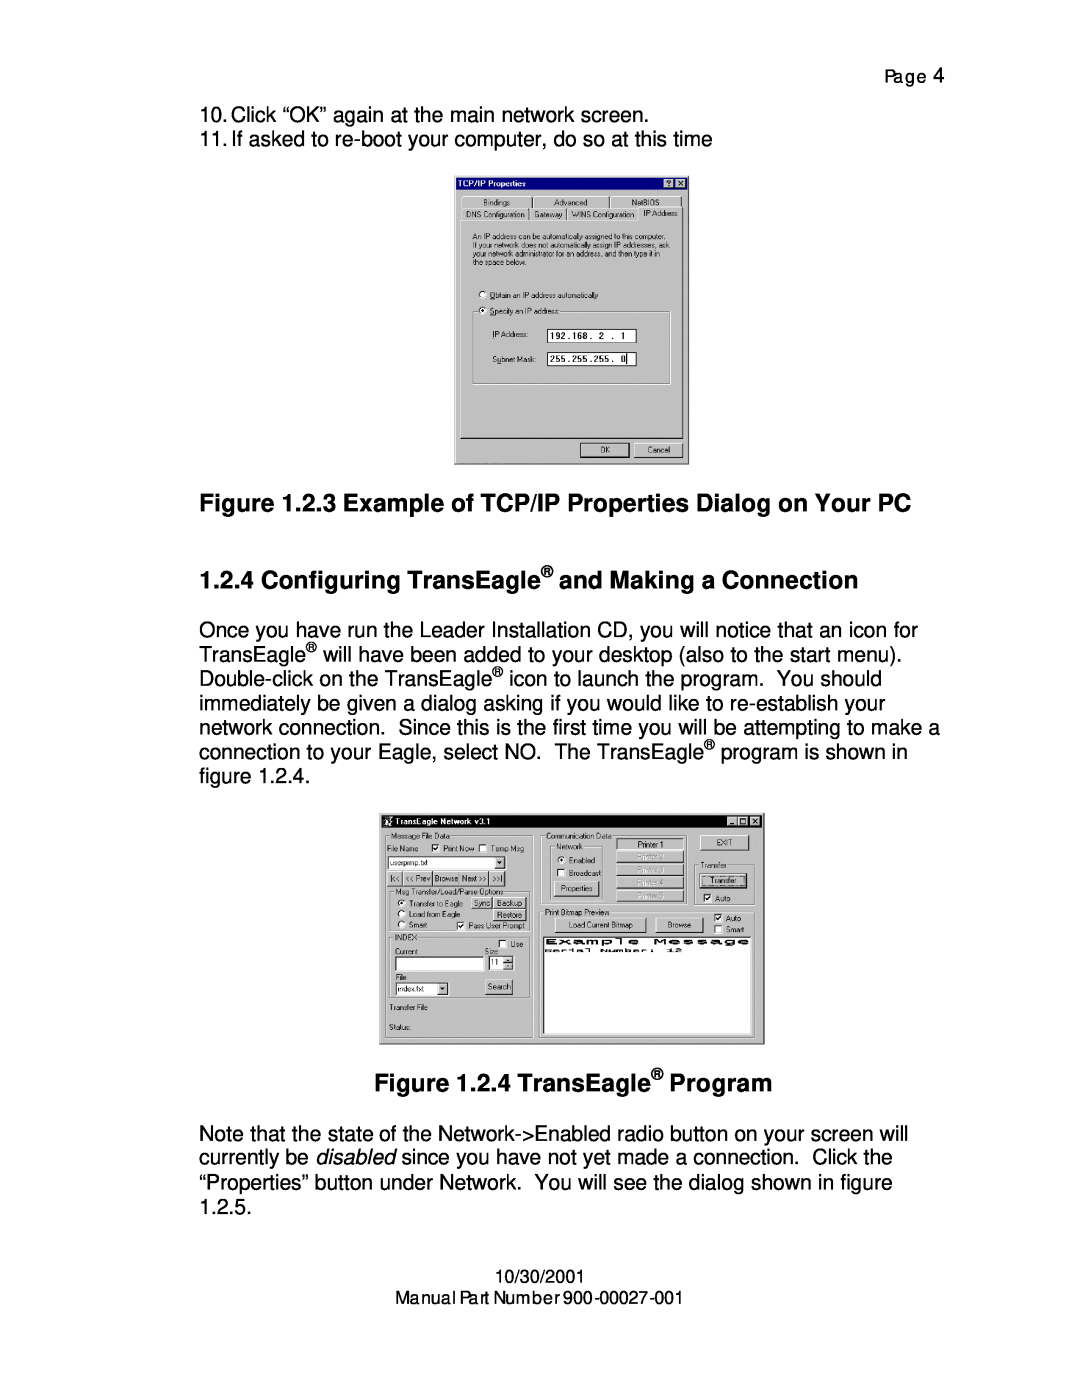 Eagle Electronics 900-00027-001, TransEagle Network Software manual 2.4 TransEagle Program 